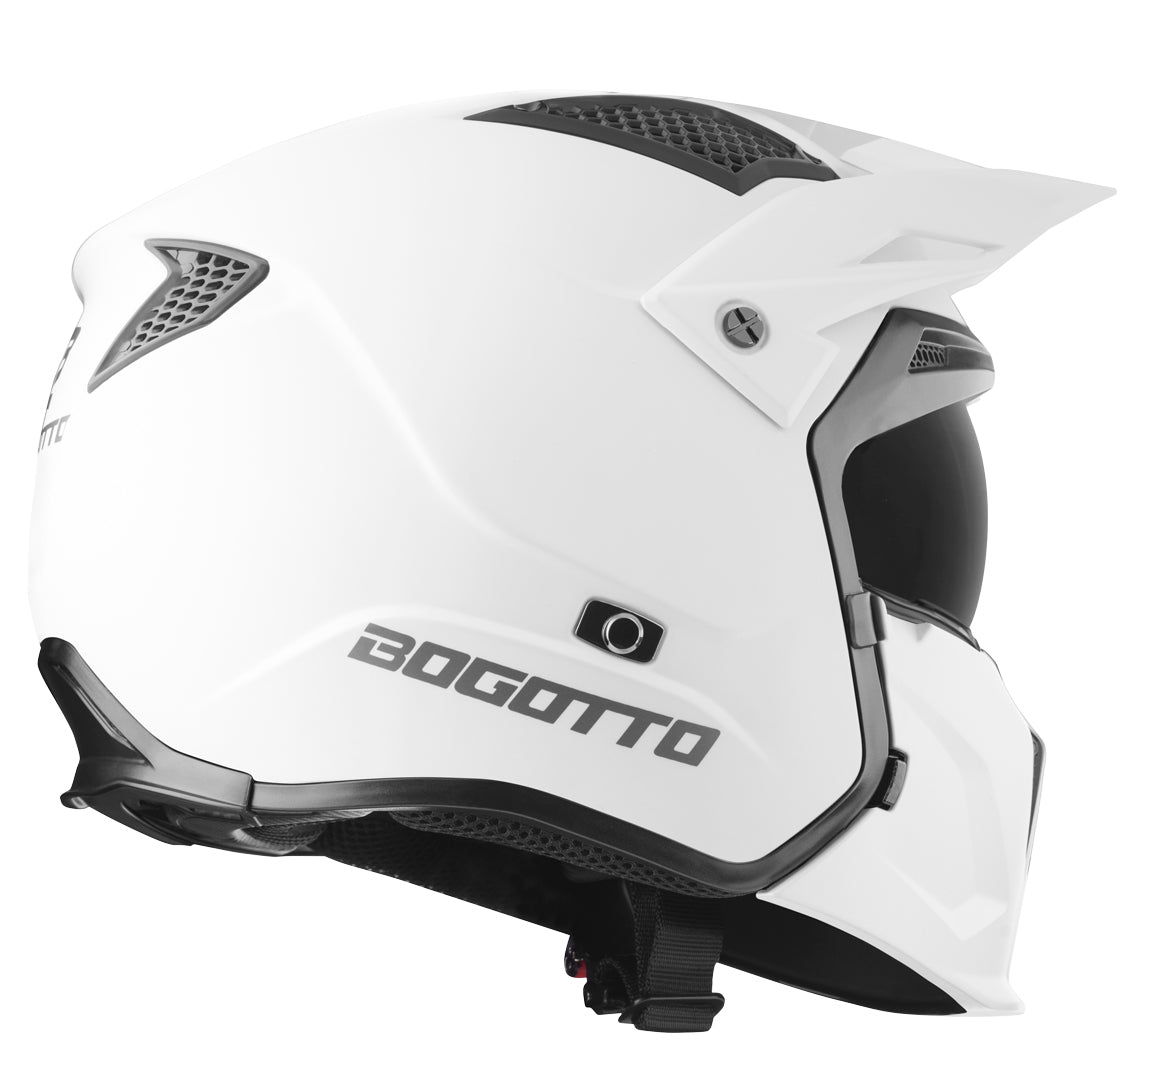 Bogotto Radic Helmet#color_white-matt